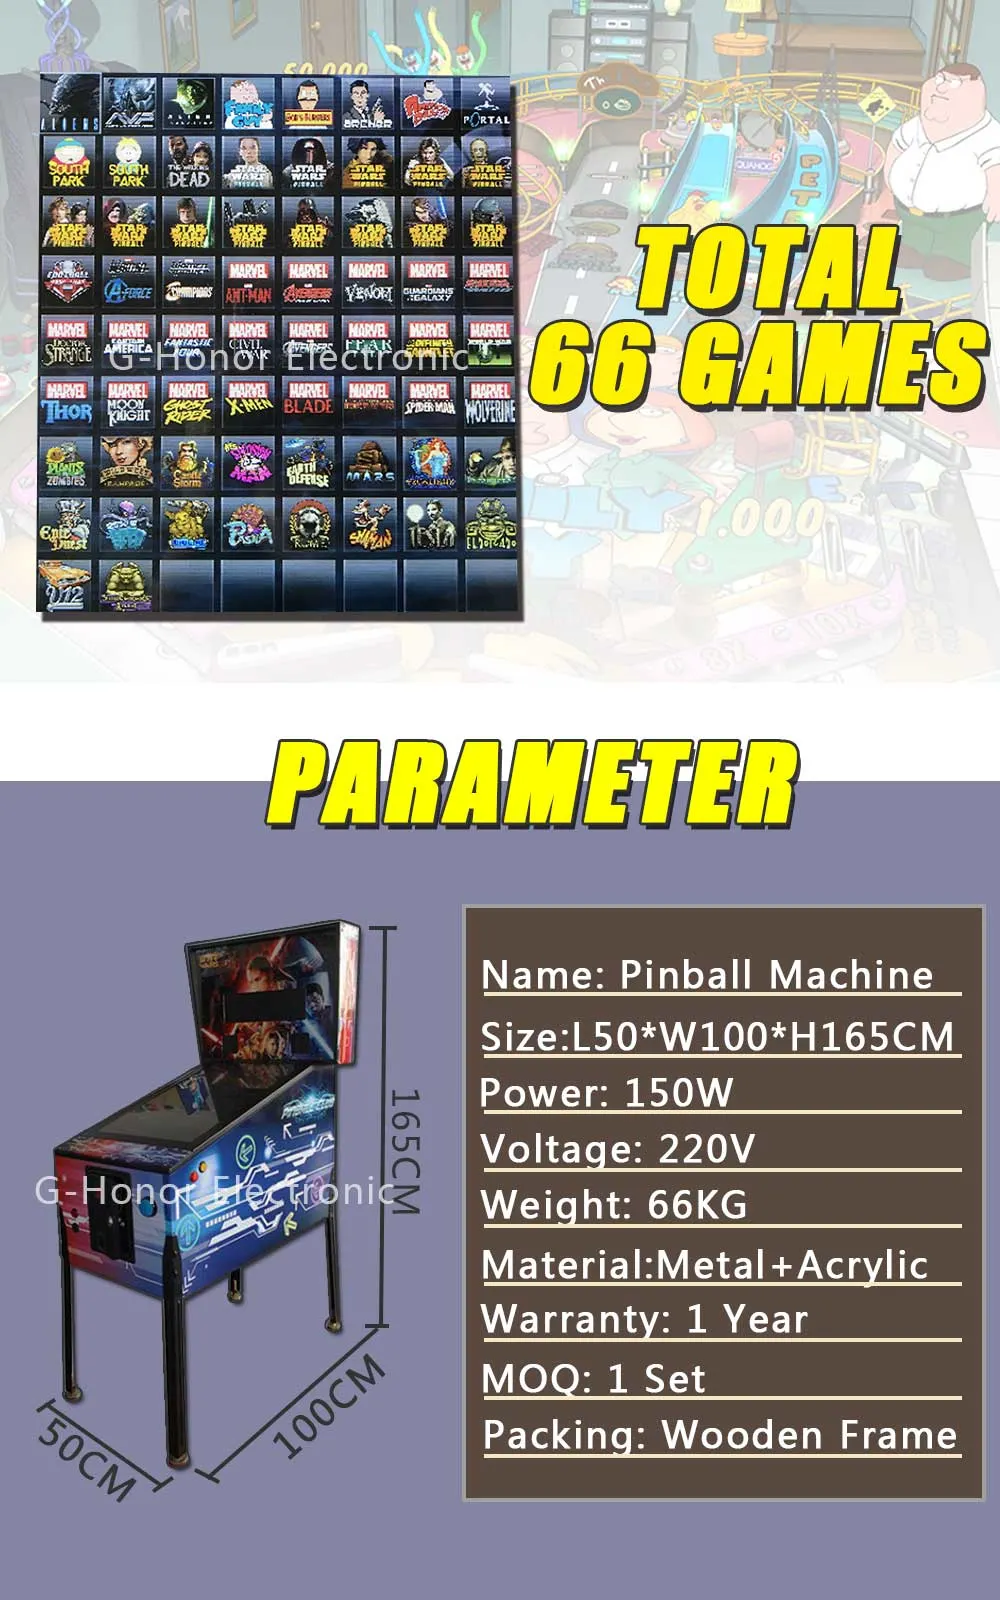 Most Popular 2 Screens Coin Operated Pinball Game Machine Arcade Simulator Pinball Game Arcade Street Fighting Video Game Machine Arcade Pinball